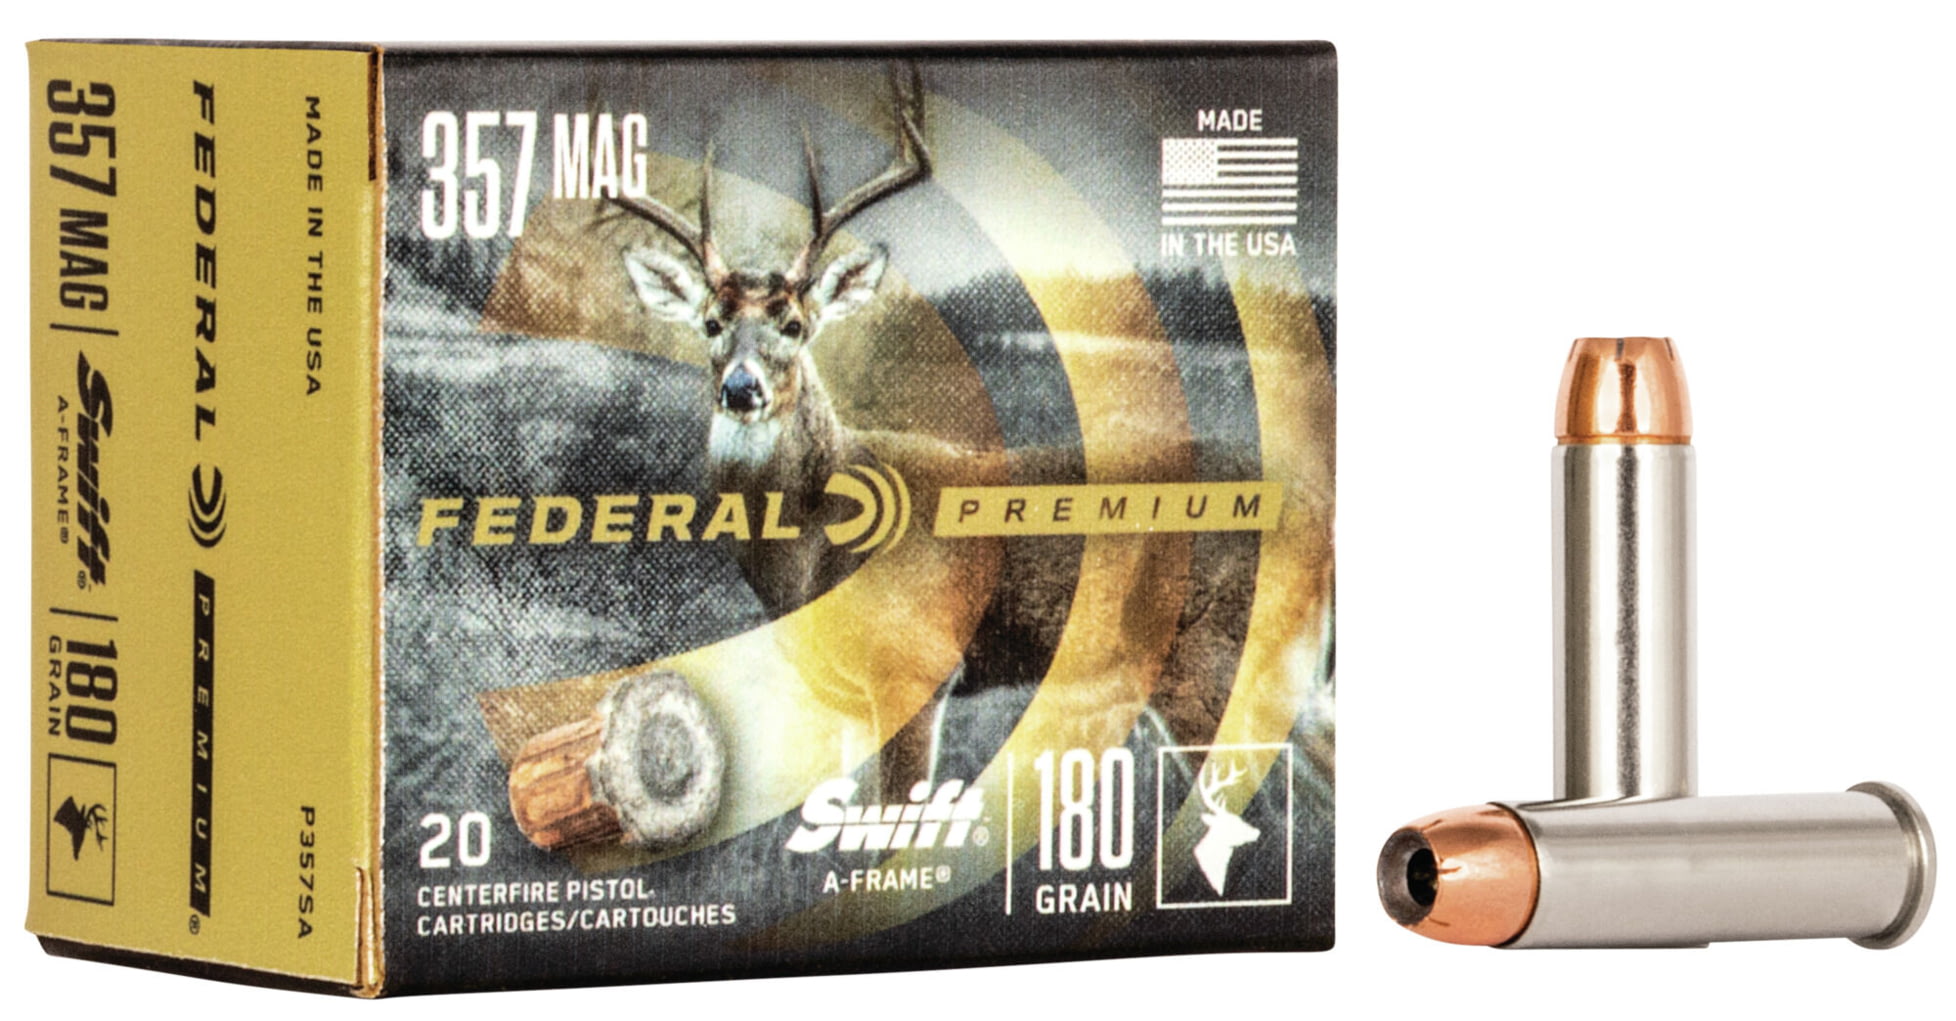 Federal Premium Centerfire Handgun Ammunition .357 Magnum 180 grain Swift A-Frame Centerfire Pistol Ammunition